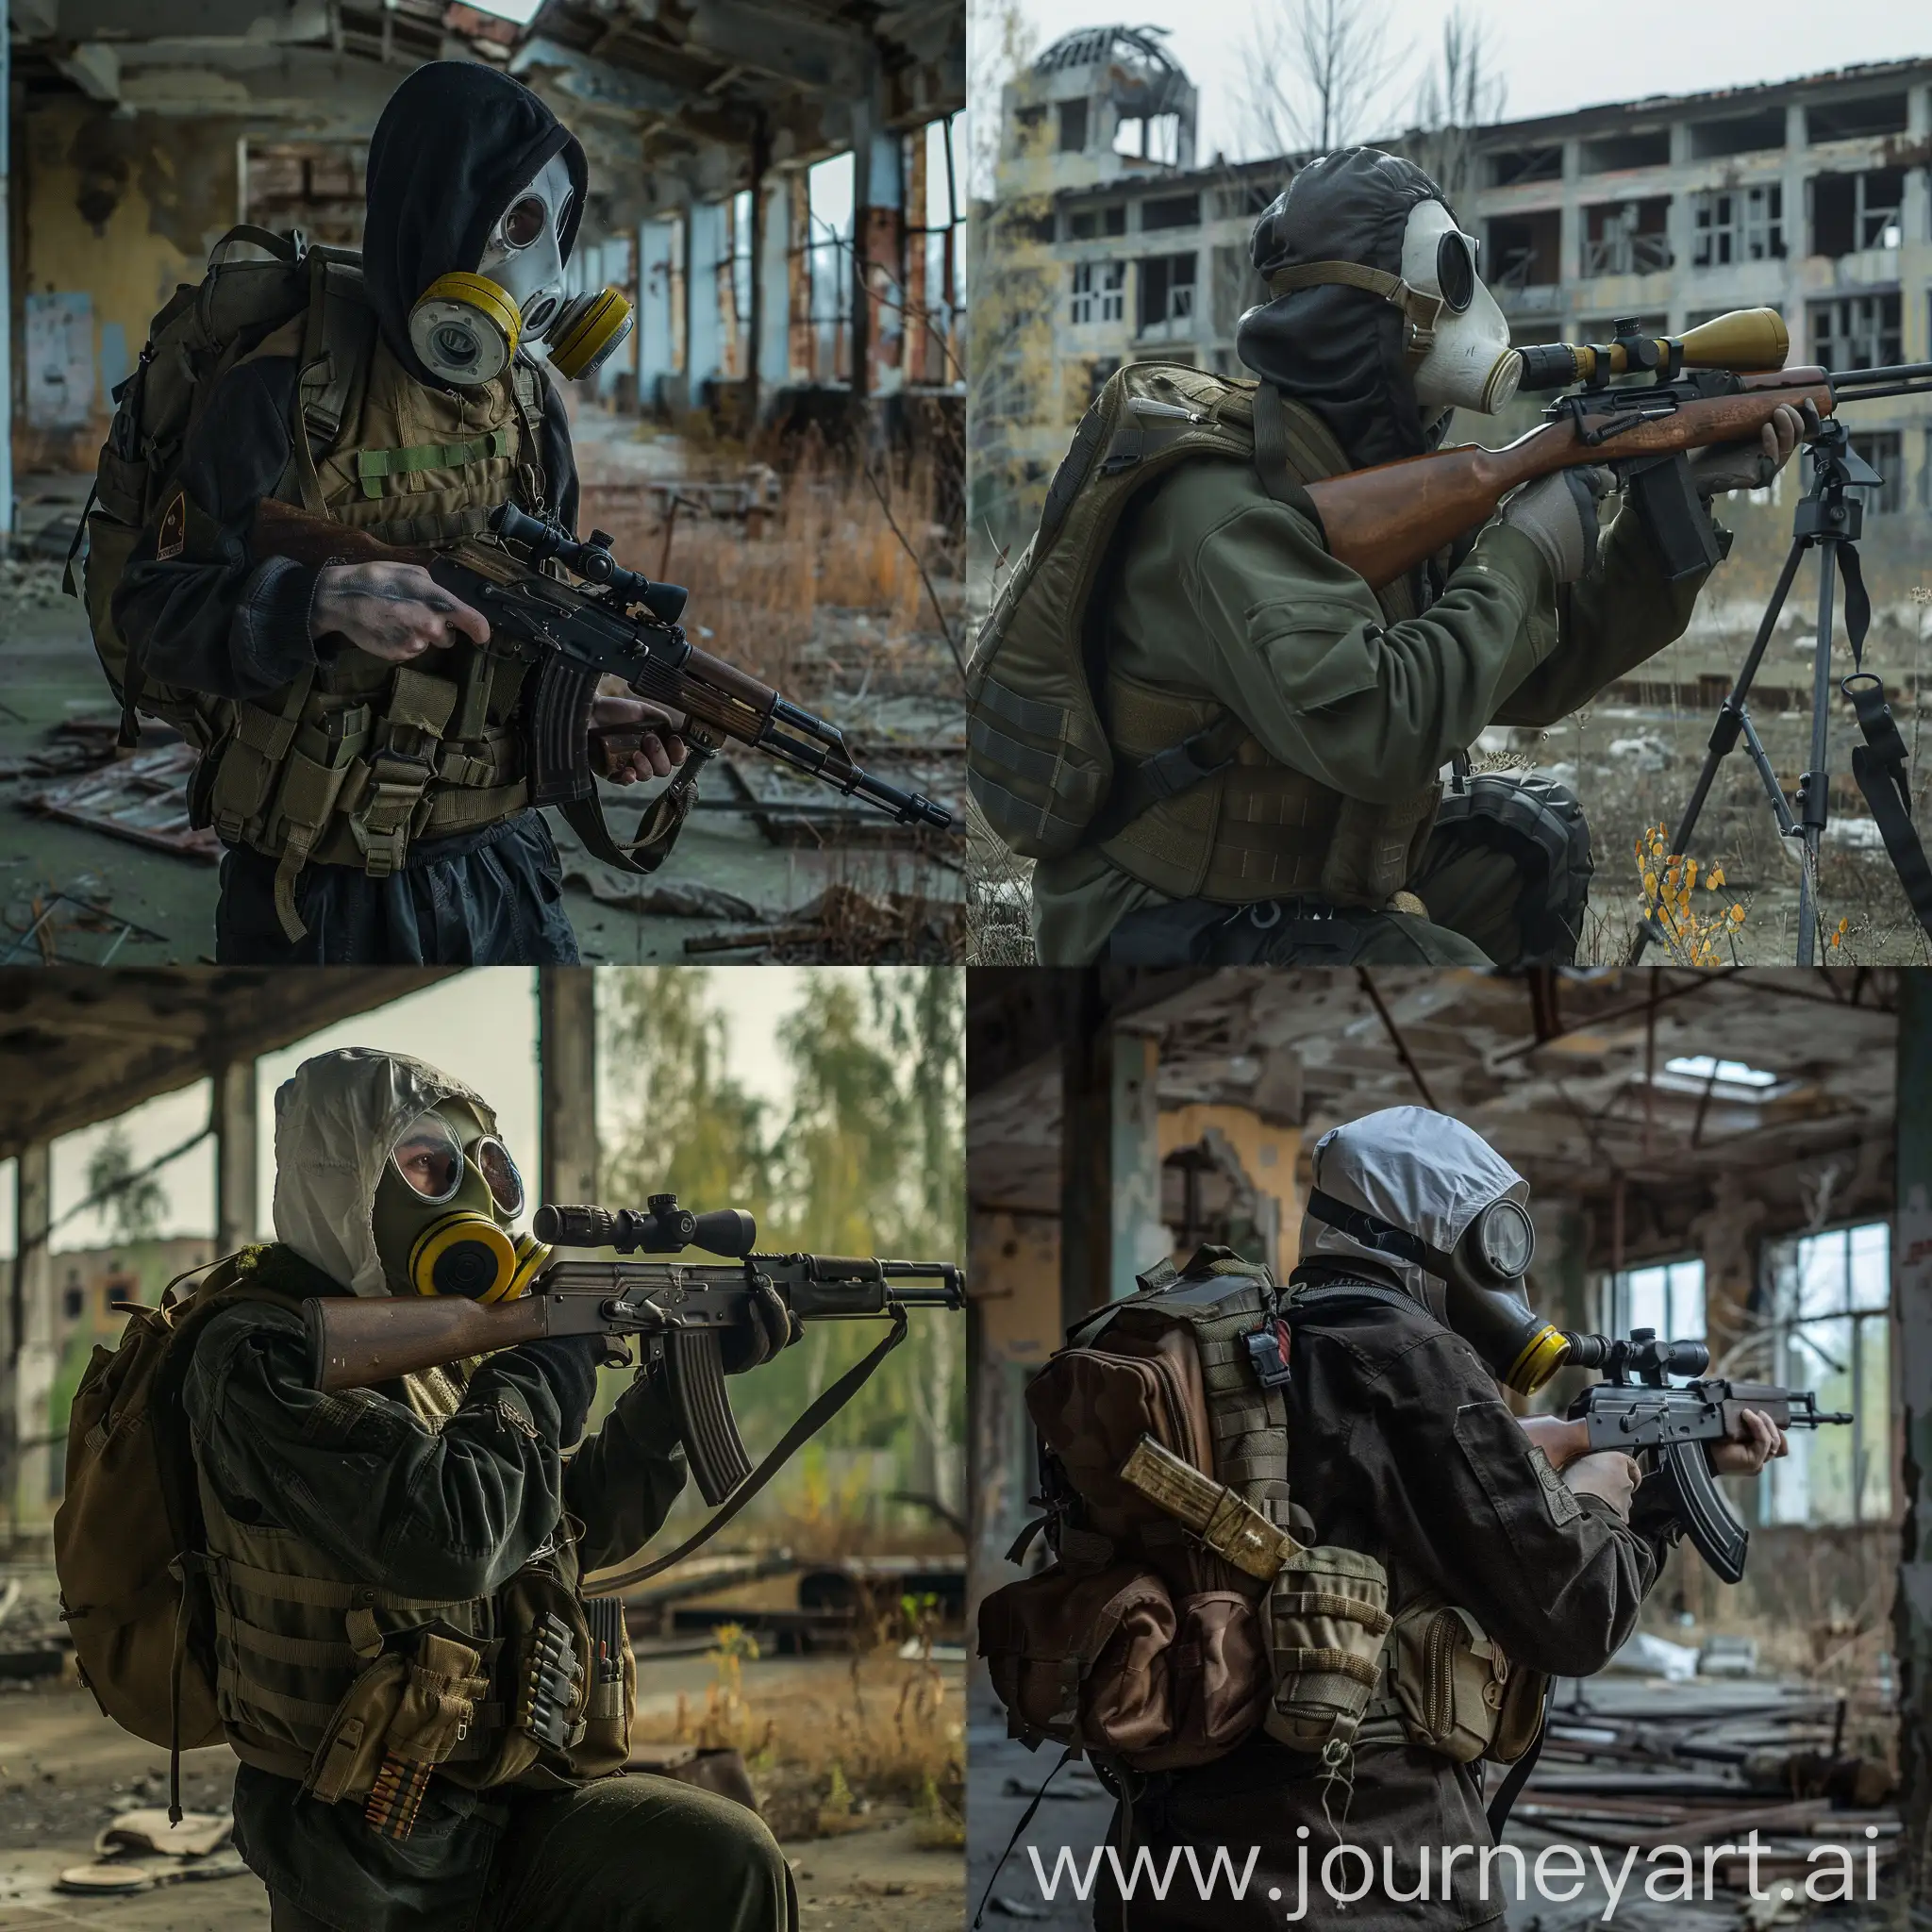 Loner-Stalker-with-Sniper-Rifle-in-Abandoned-Pripyat